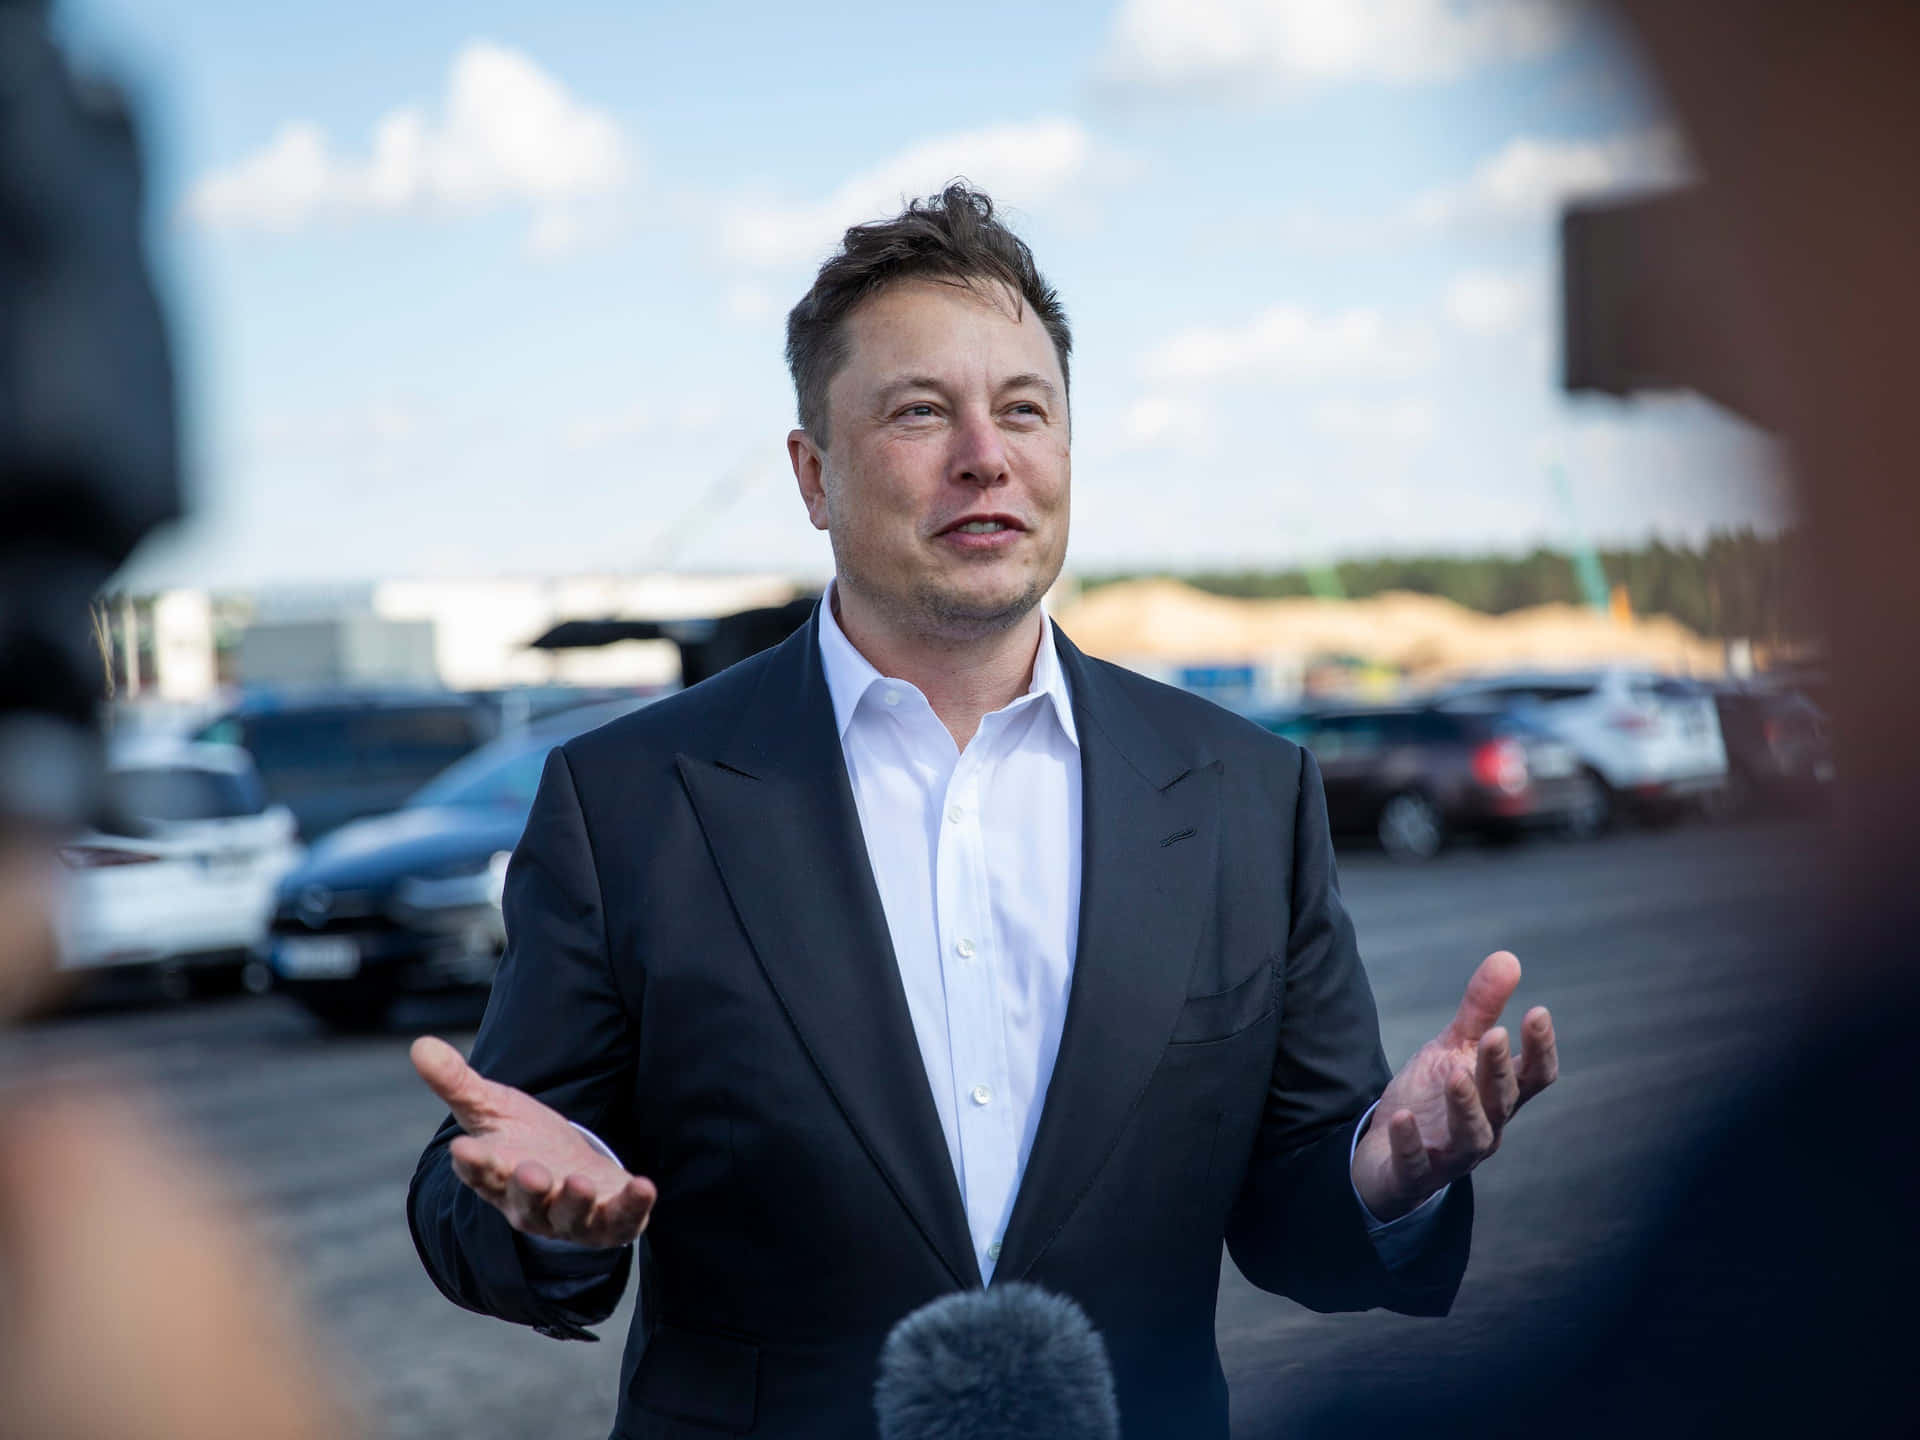 Visionarioempresario E Innovador Elon Musk